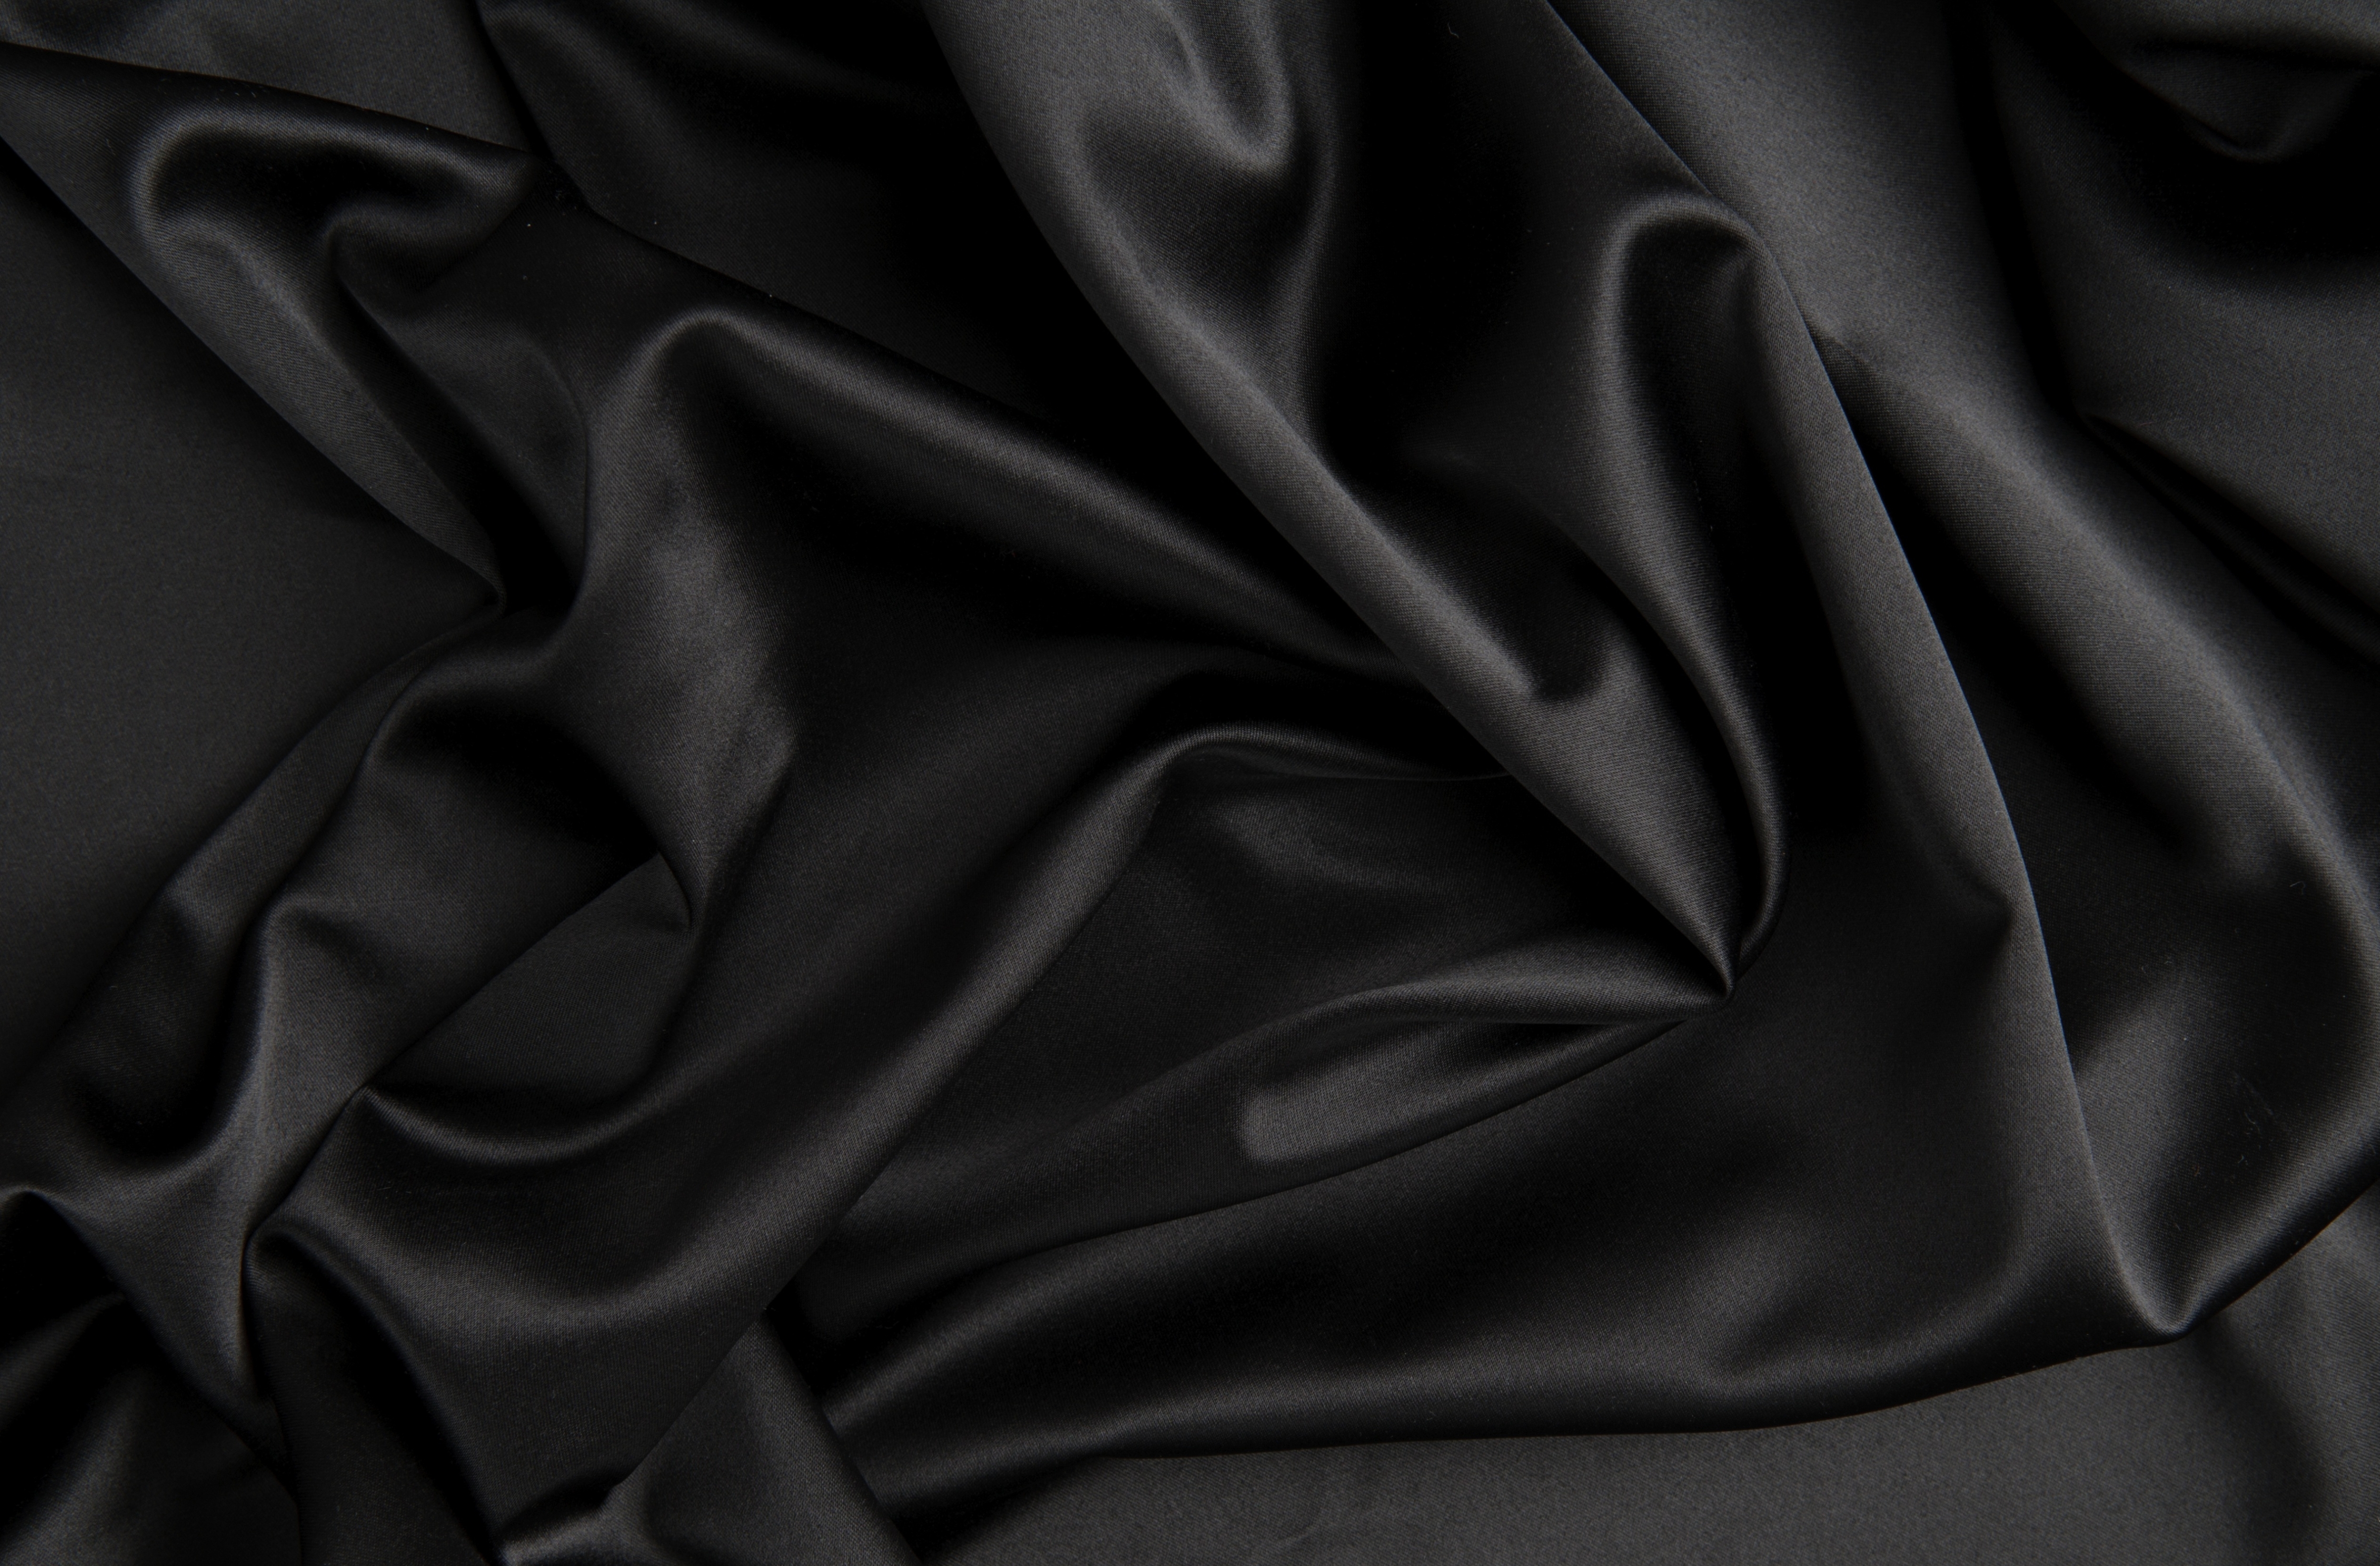 Silk satin cloth black folds texture wallpaper   ForWallpapercom 5000x3290